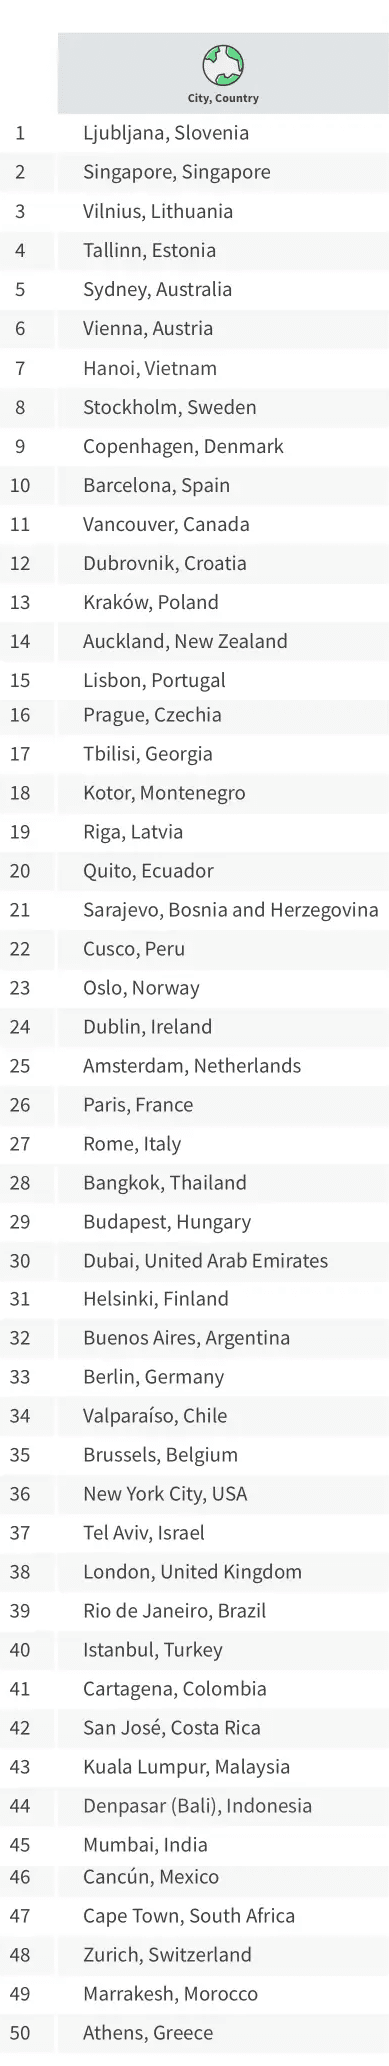 Miniatura ranking 50 cidades viajar sozinha